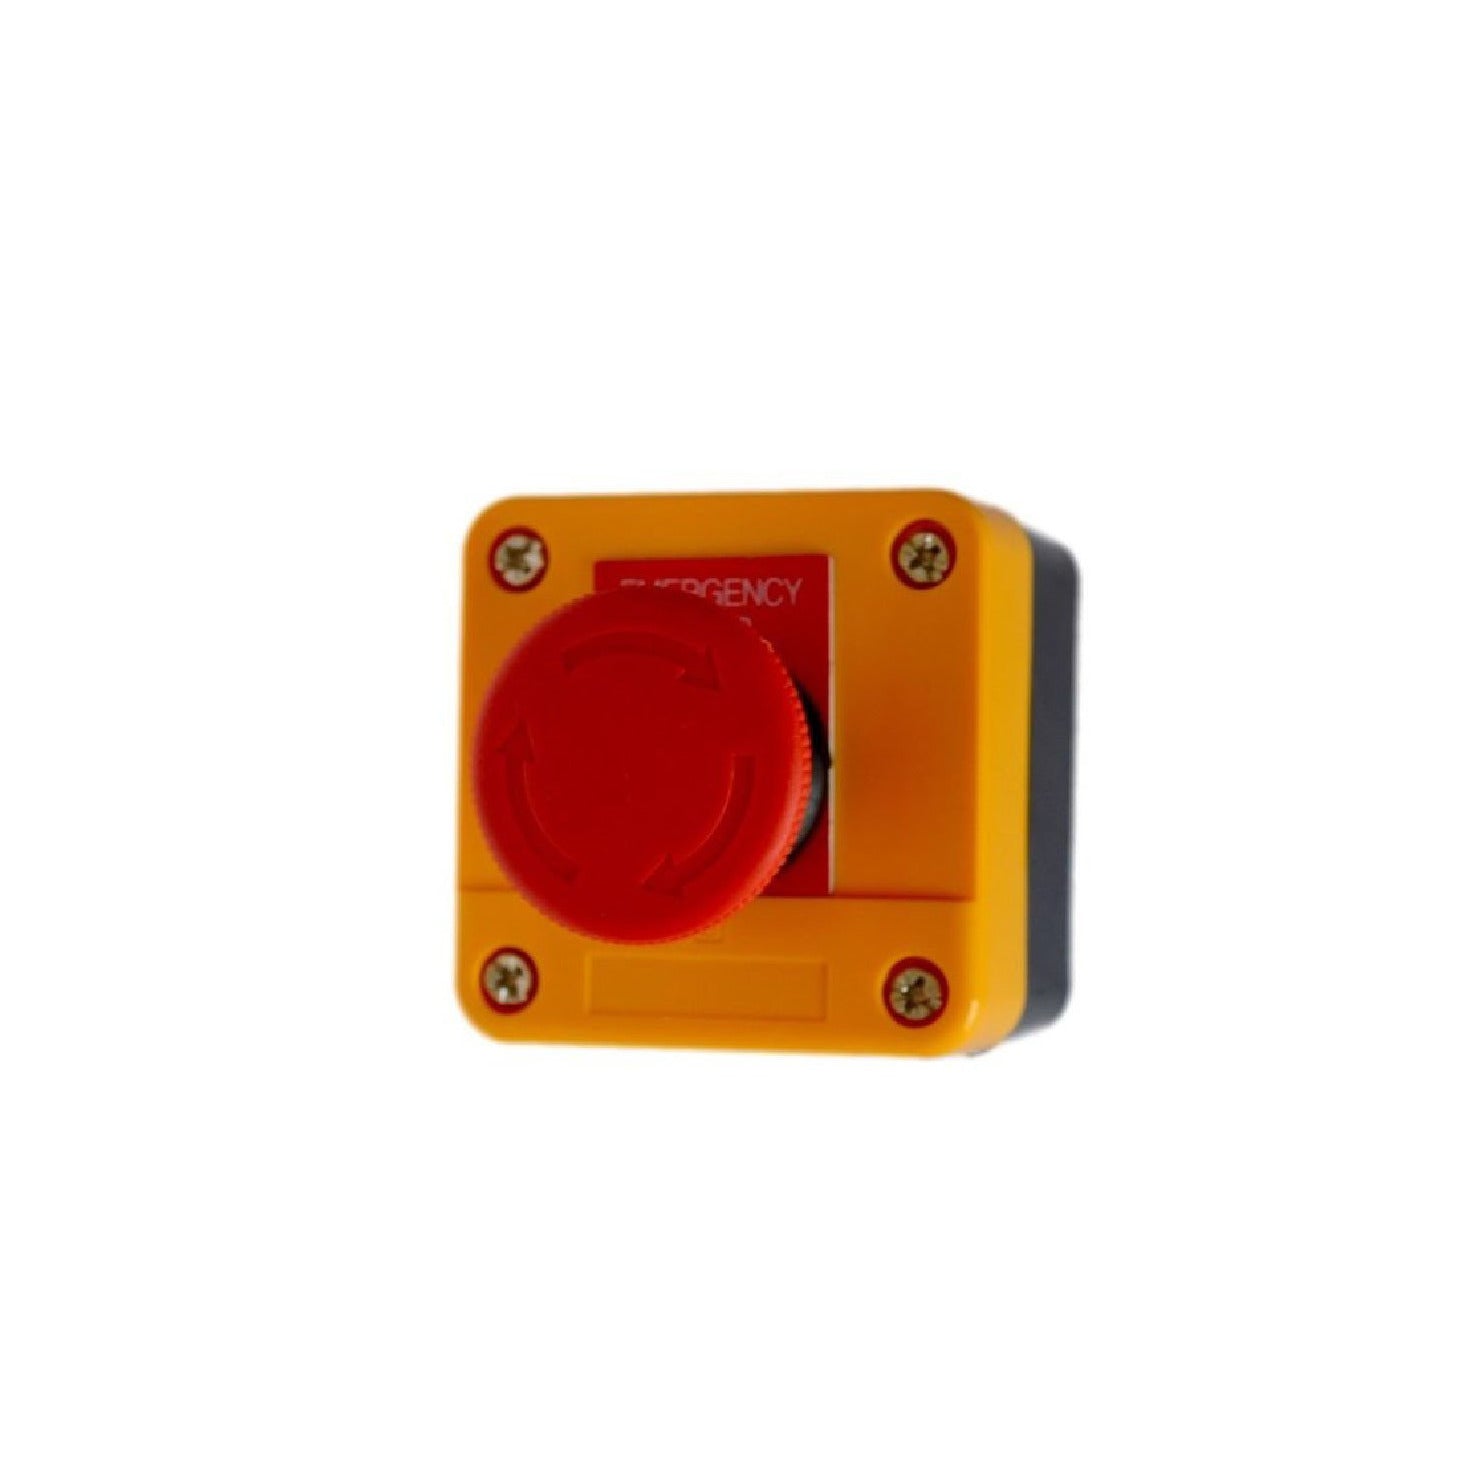 Emergency Red Button Stop xTen, Switch E stop 12V 24V Safety Kill Switch Machine